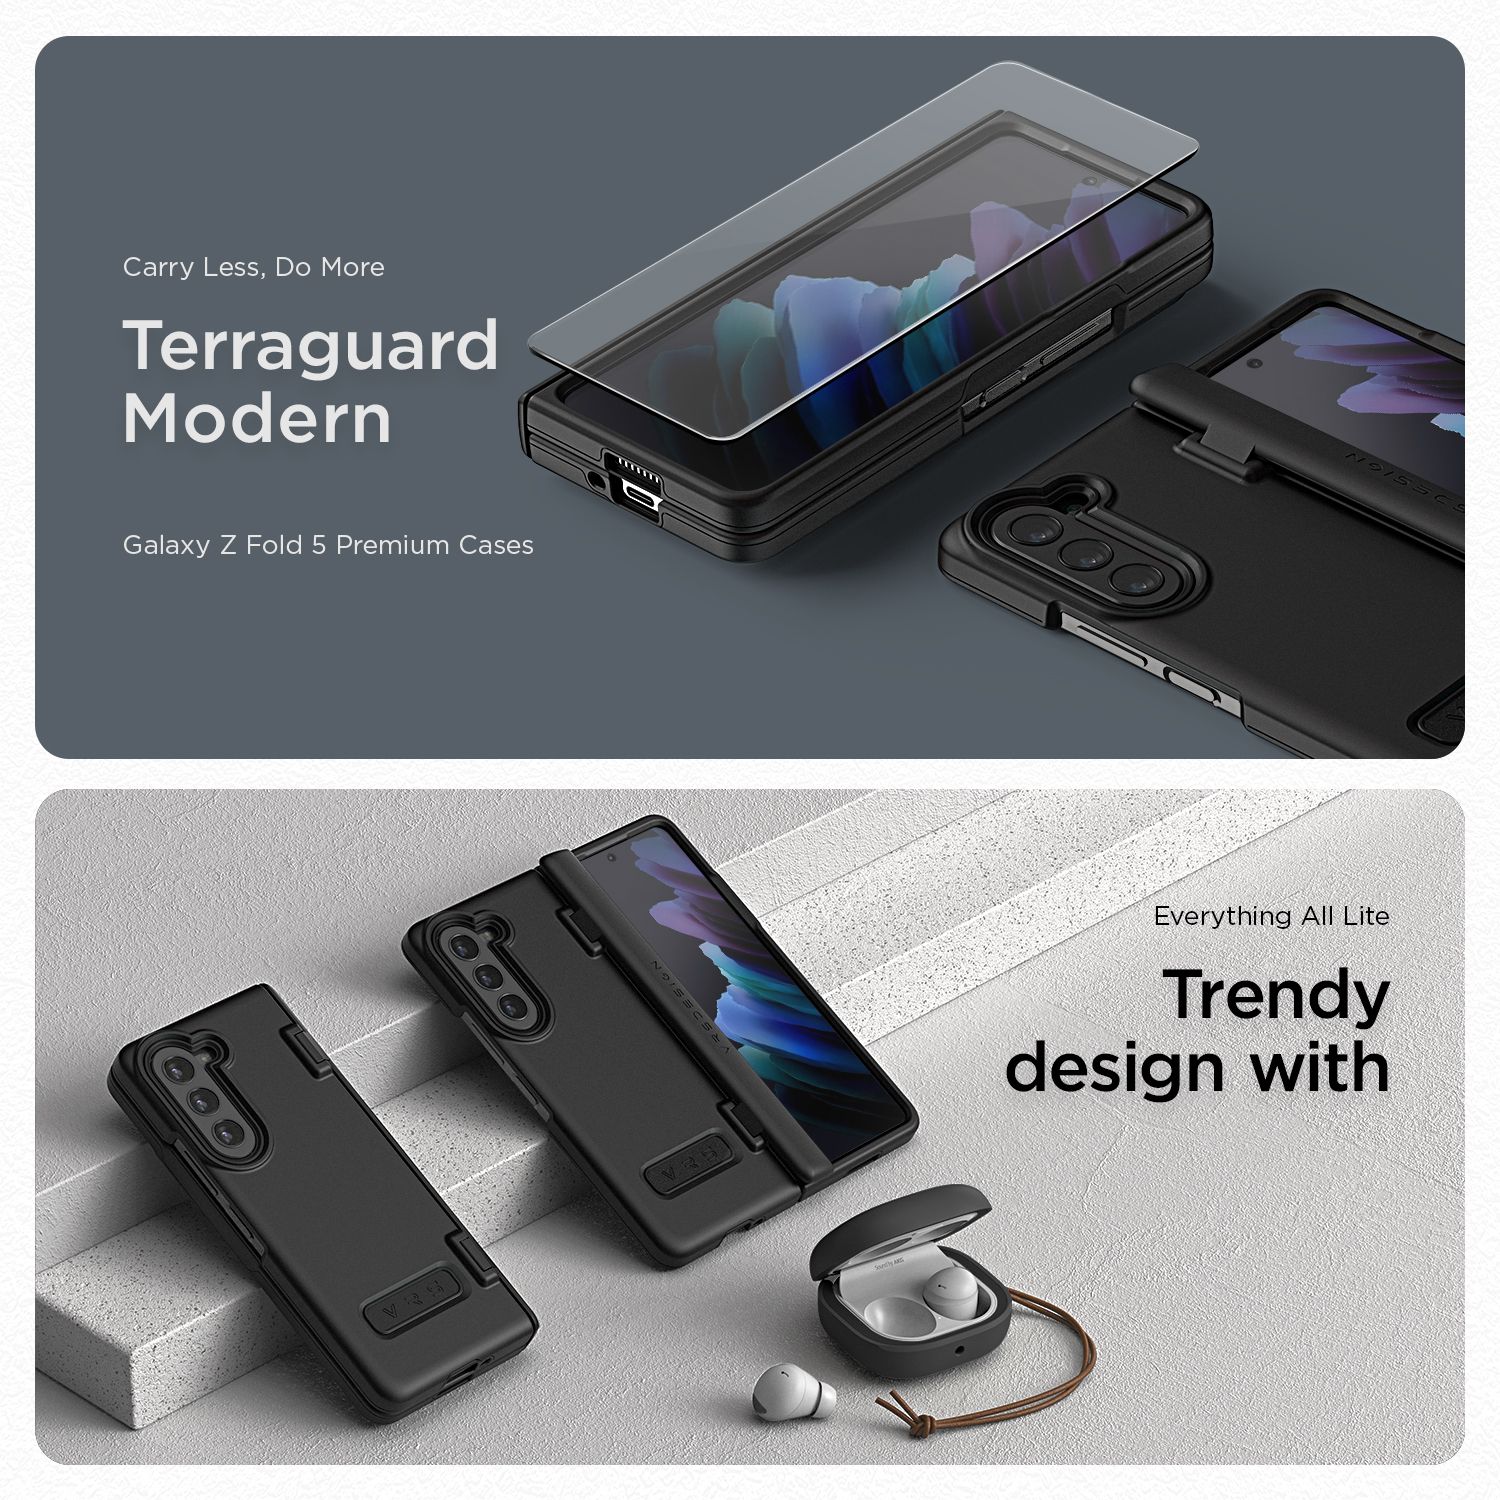 VRS รุ่น Terra Guard Modern - เคส Galaxy Z Fold 5 - สี Matte Black (แถมฟิล์มหน้าจอ)